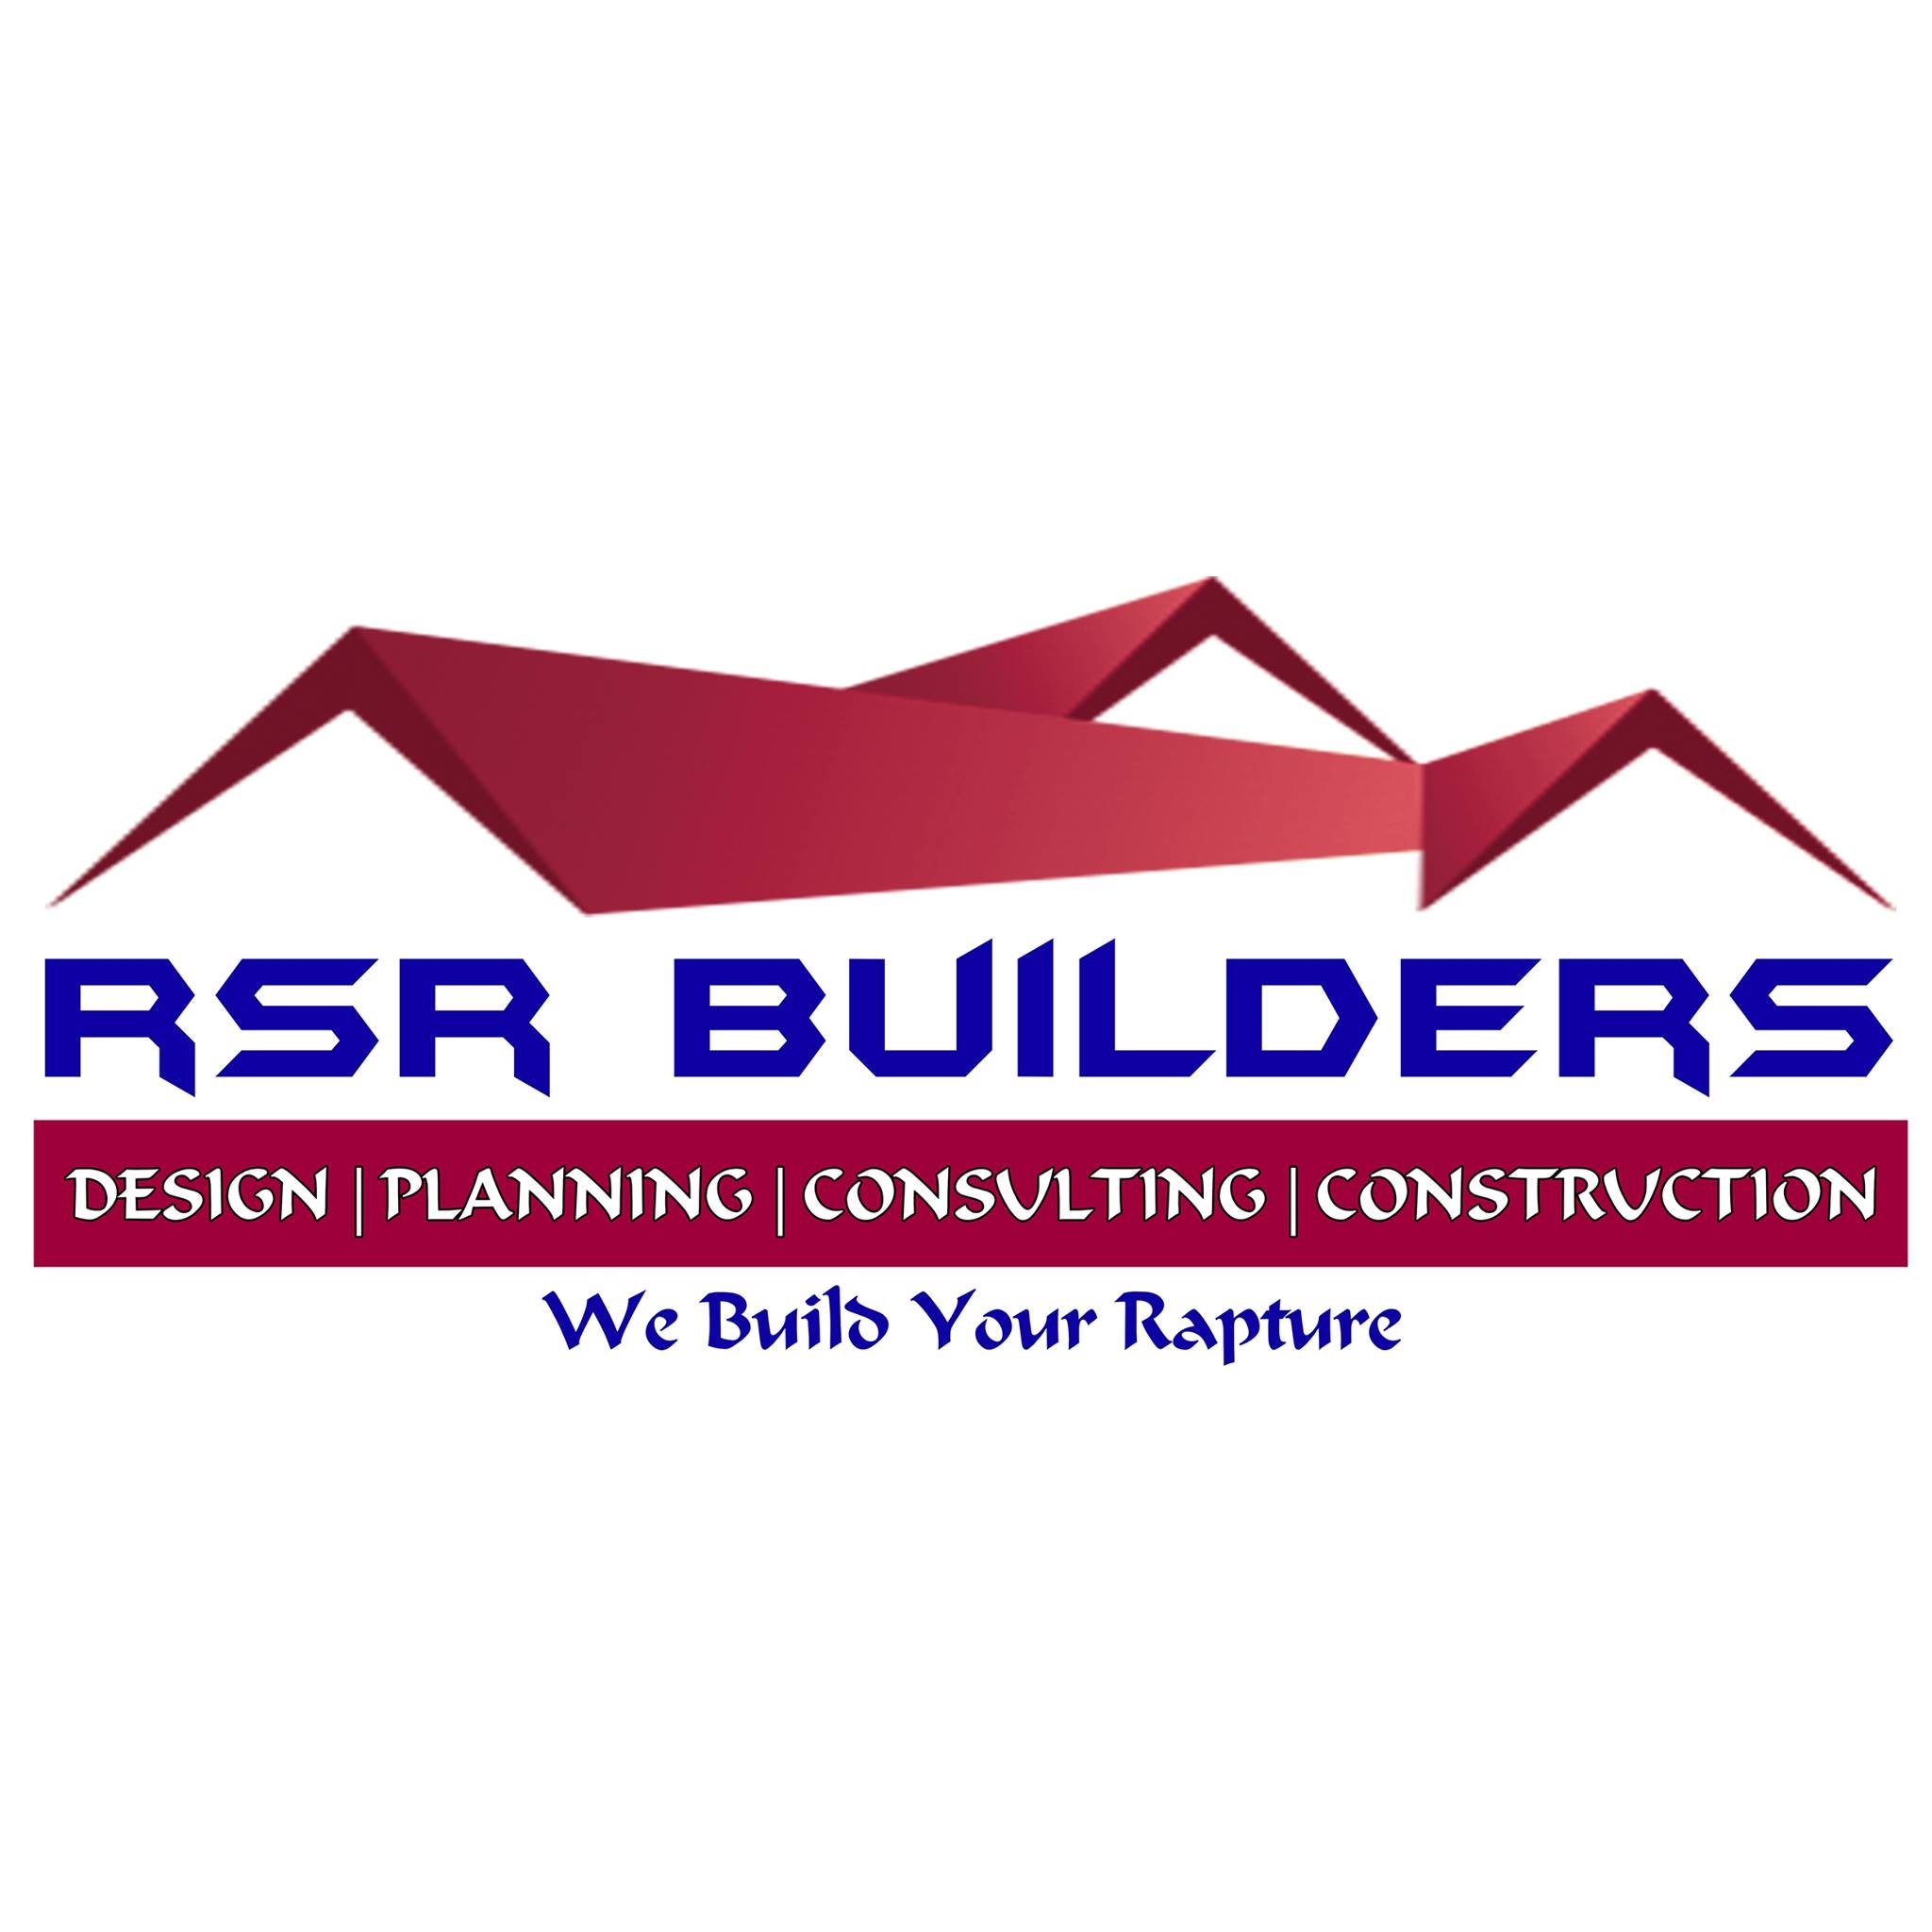 RSR BUILDERS|Architect|Professional Services